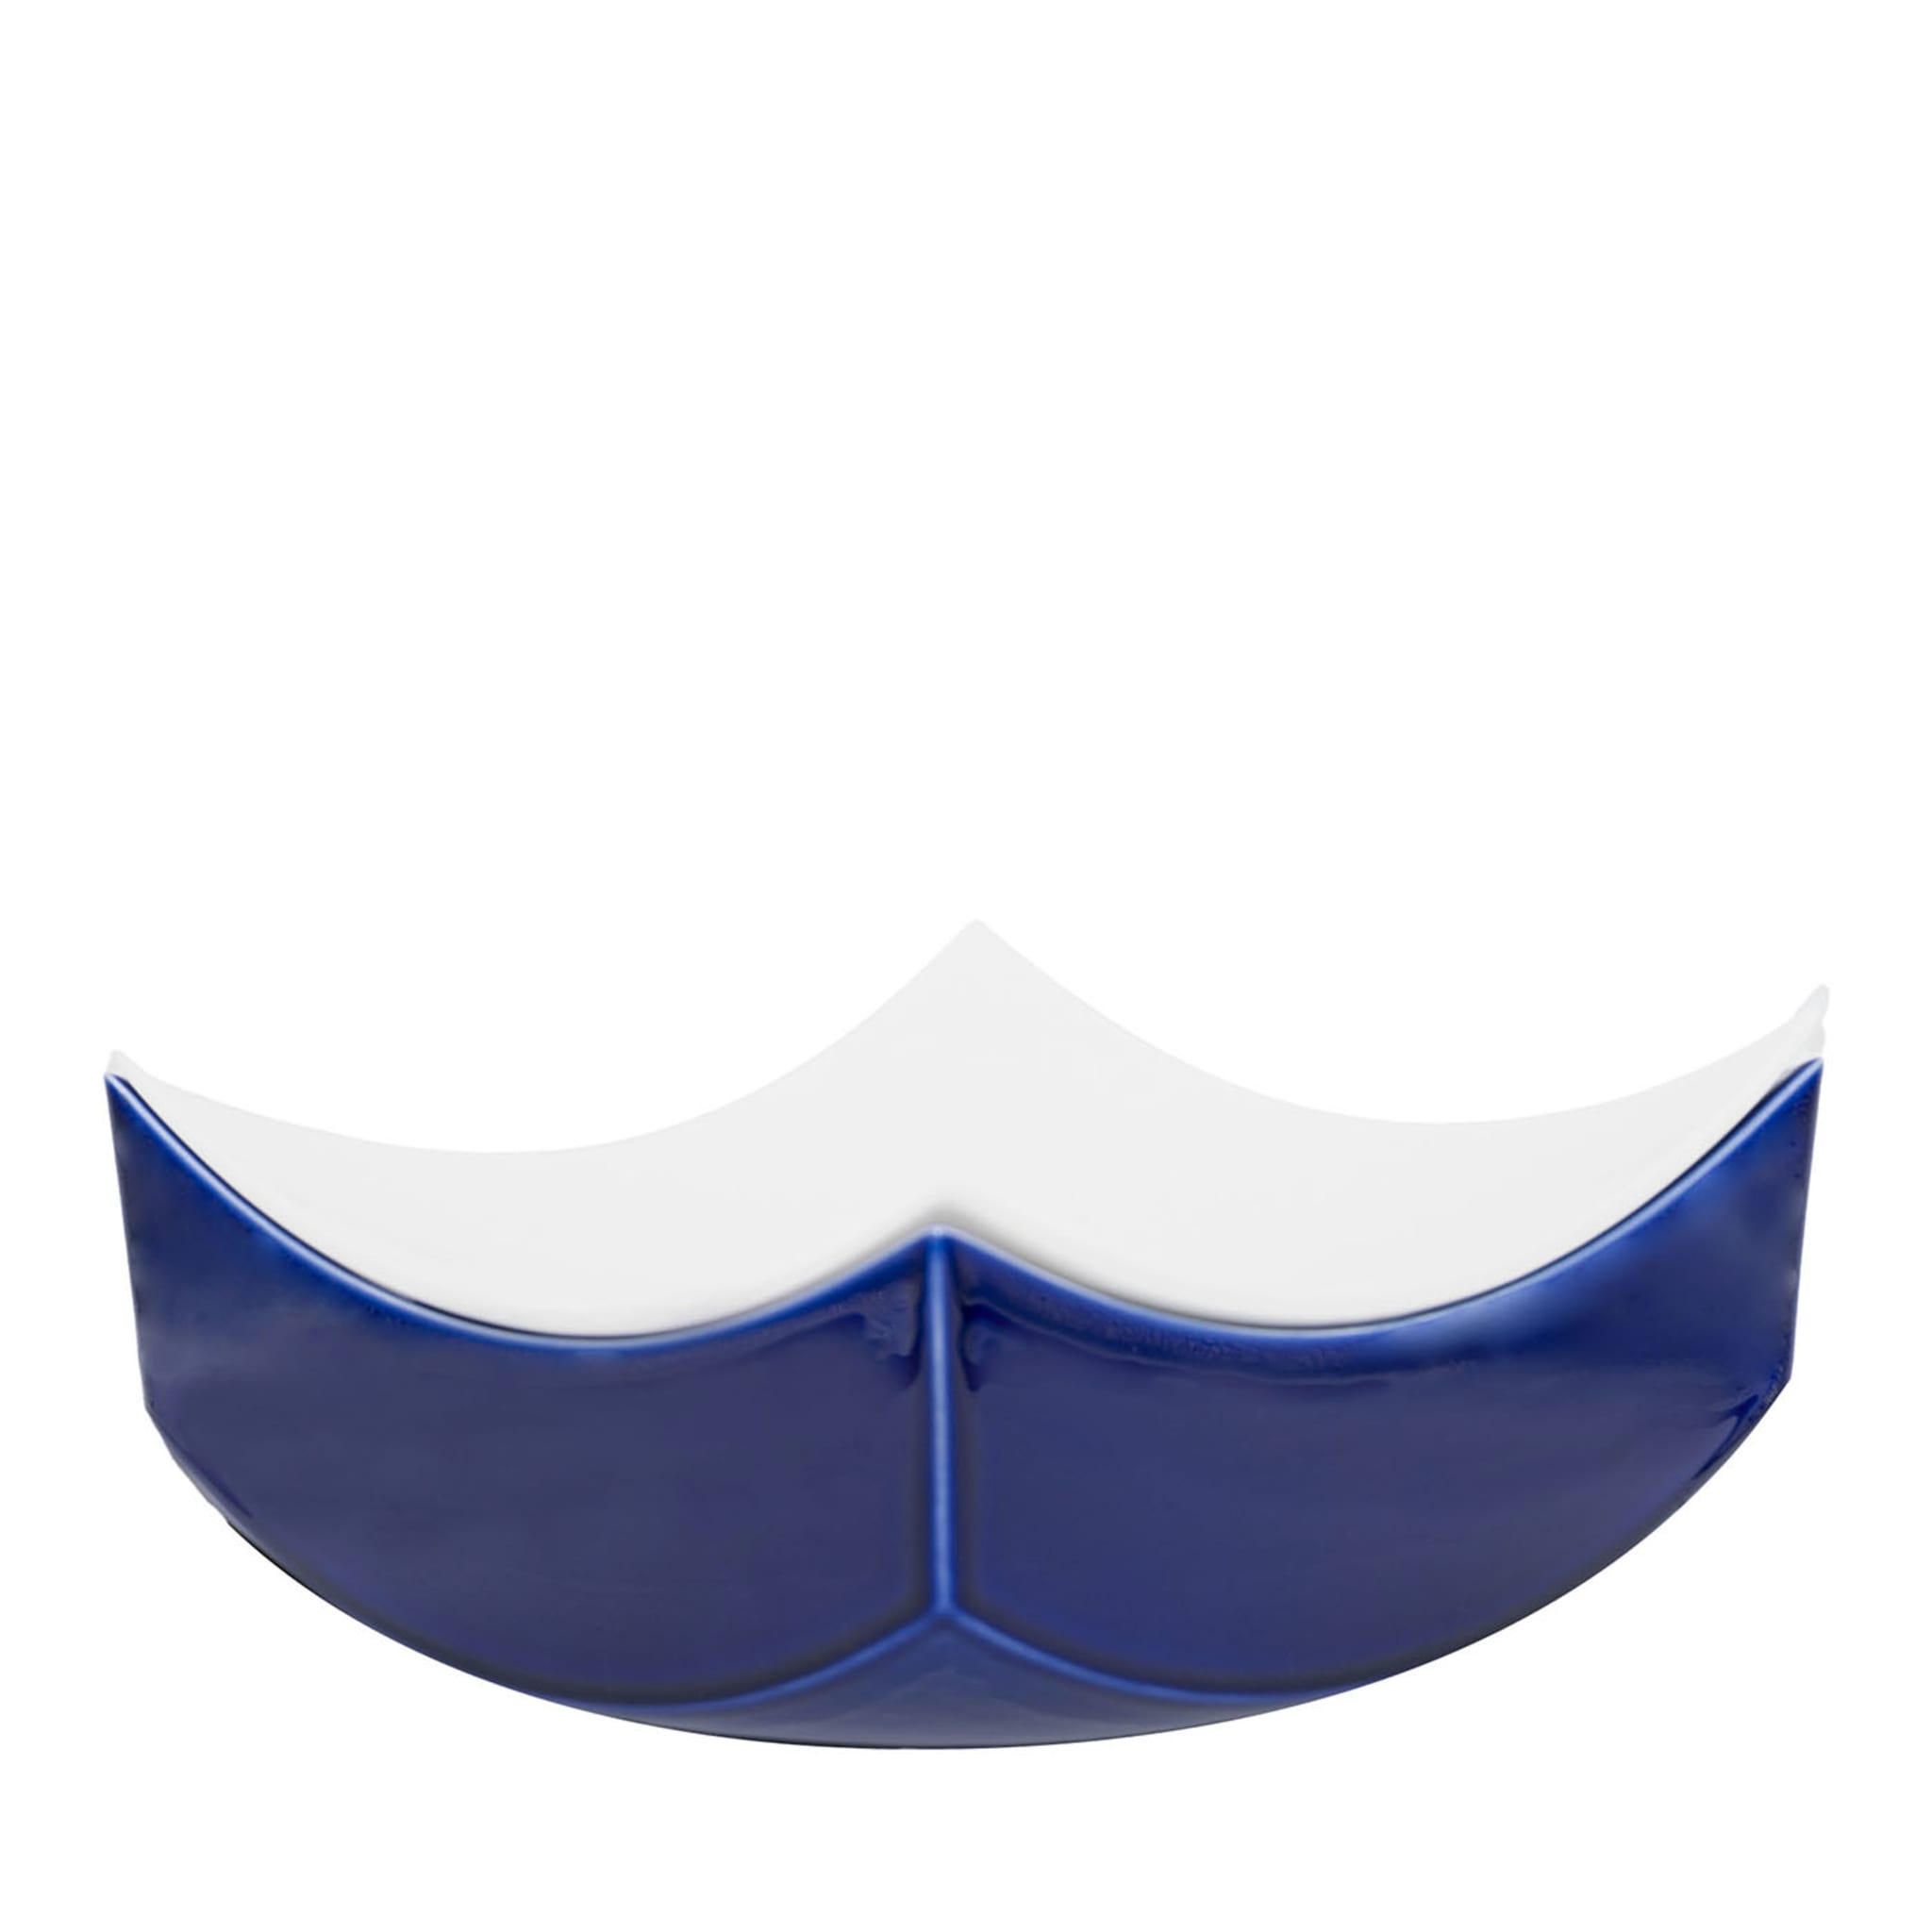 Bombonera Wave Azul y Blanca de Cristian Visentin - Vista principal